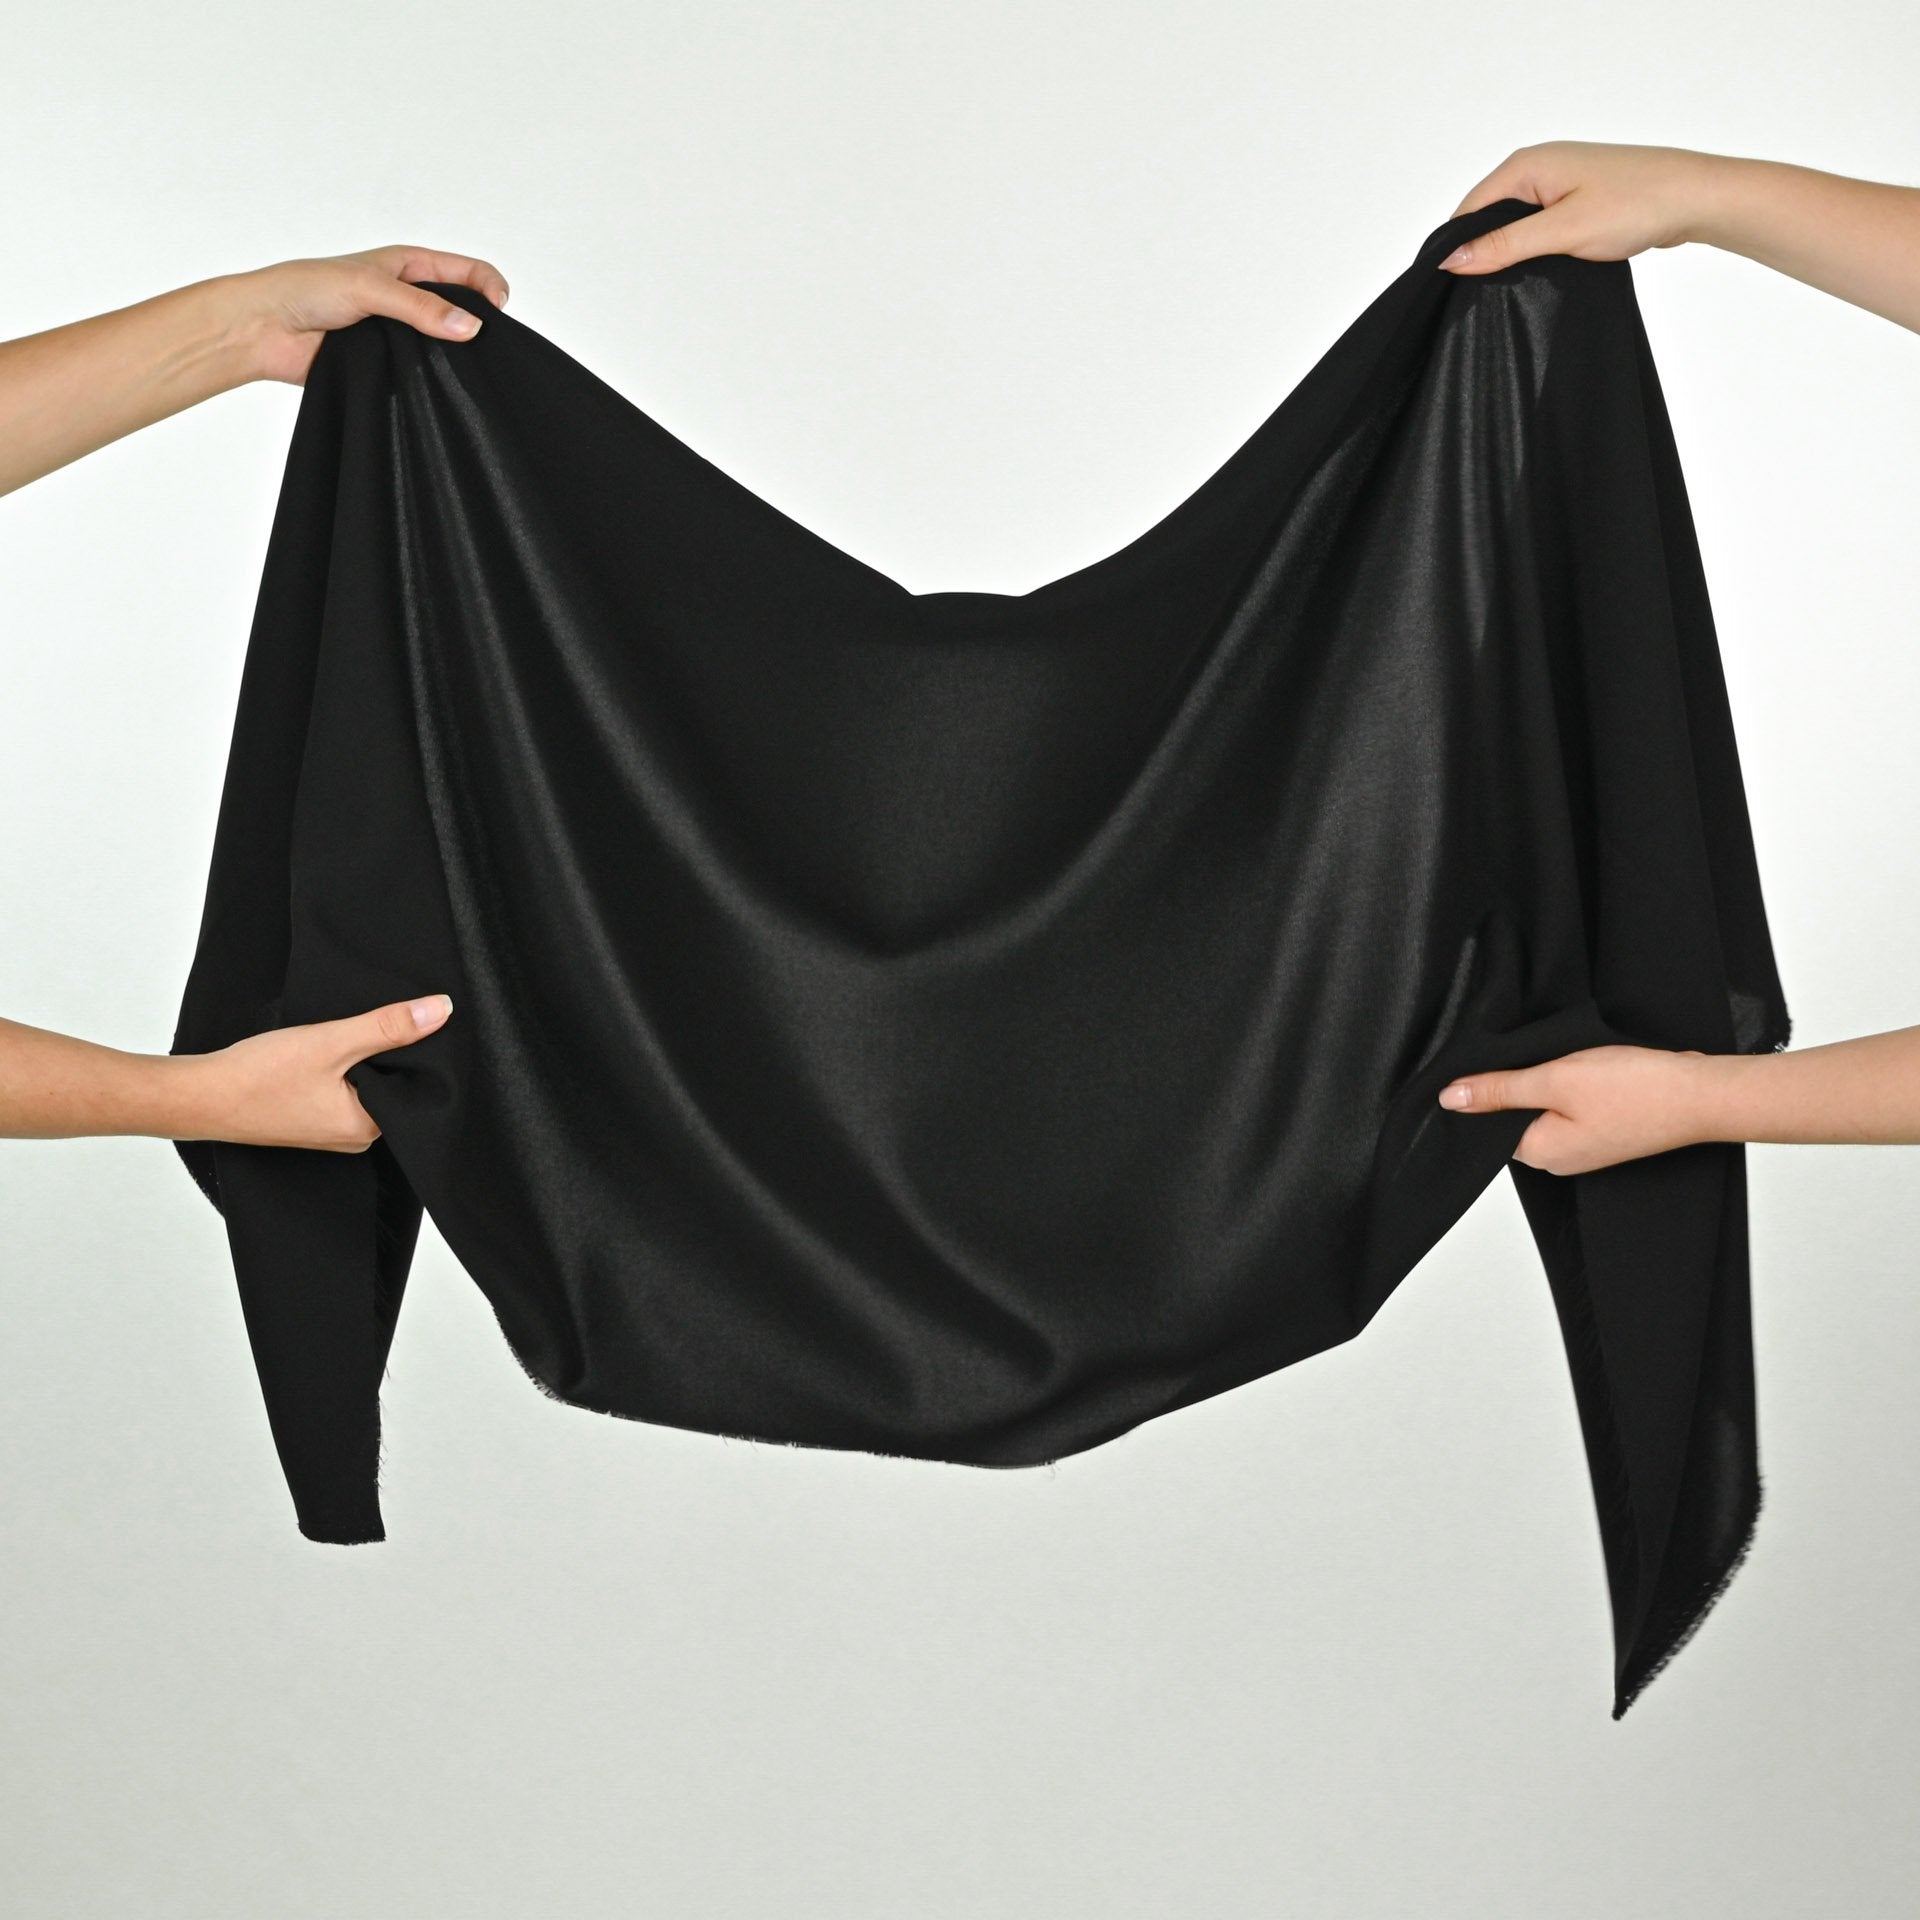 Black Crepe Fabric 6677